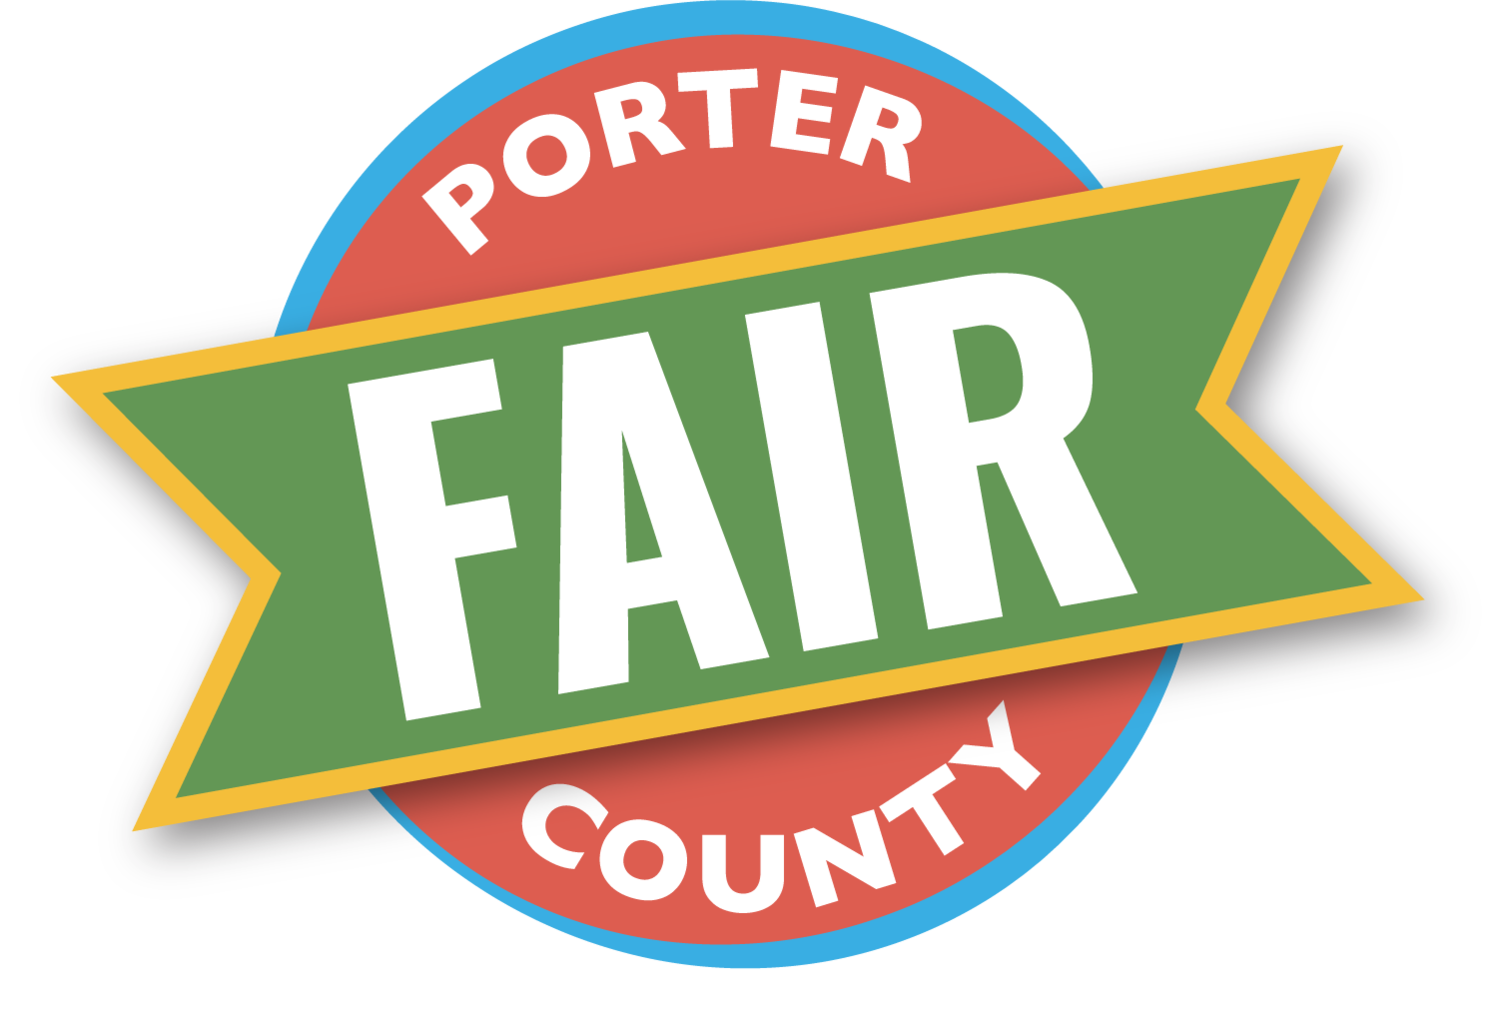 2019 Porter County Fair